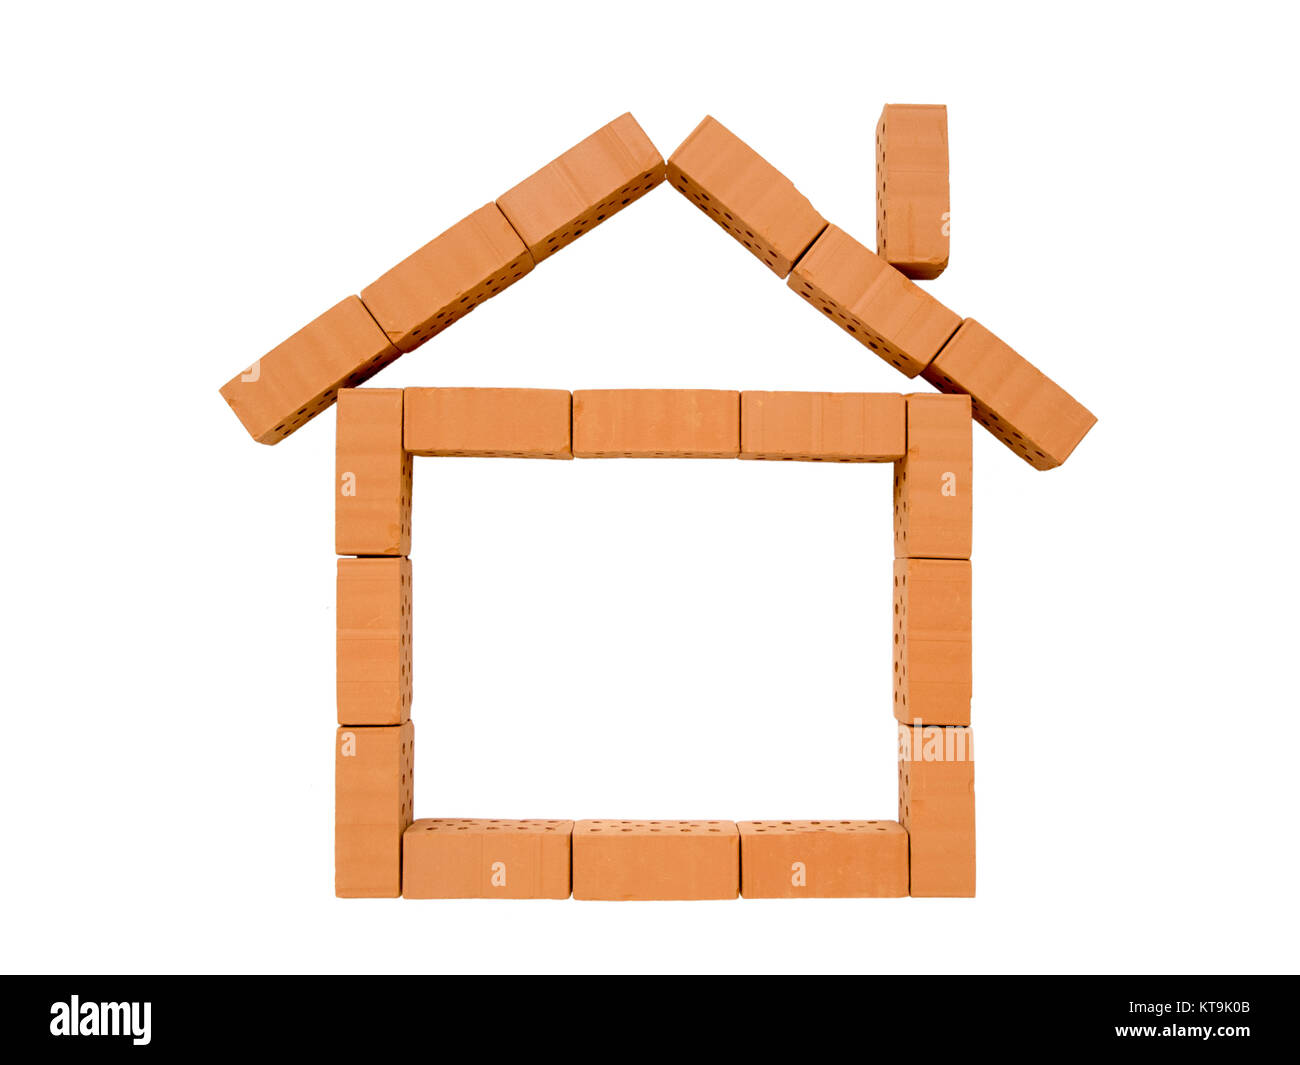 house minibrick with chimney Stock Photo